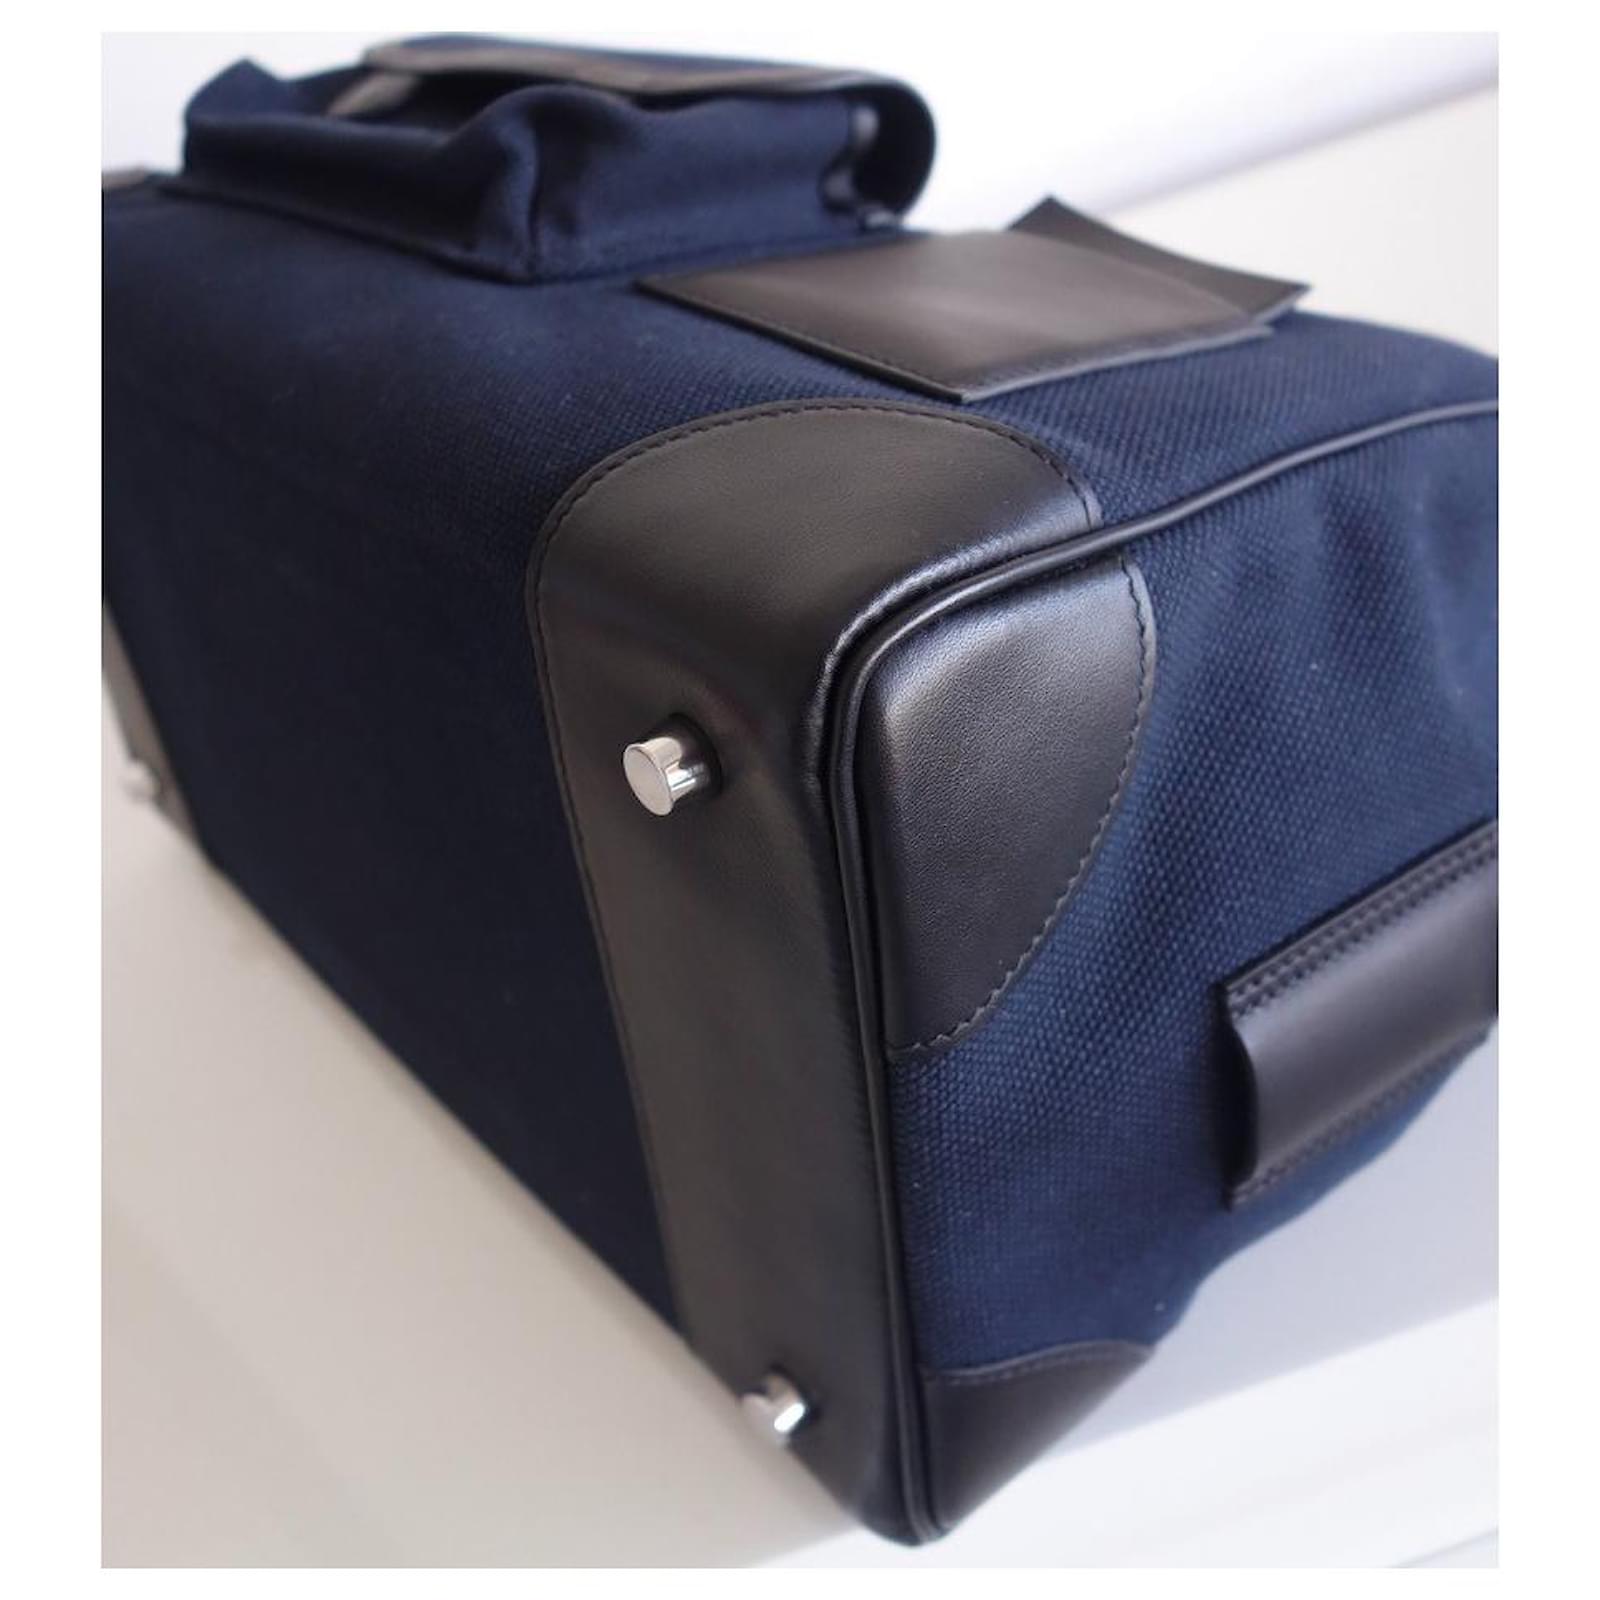 HERMÈS Birkin Cargo 35 handbag in Black Swift leather and in Blue